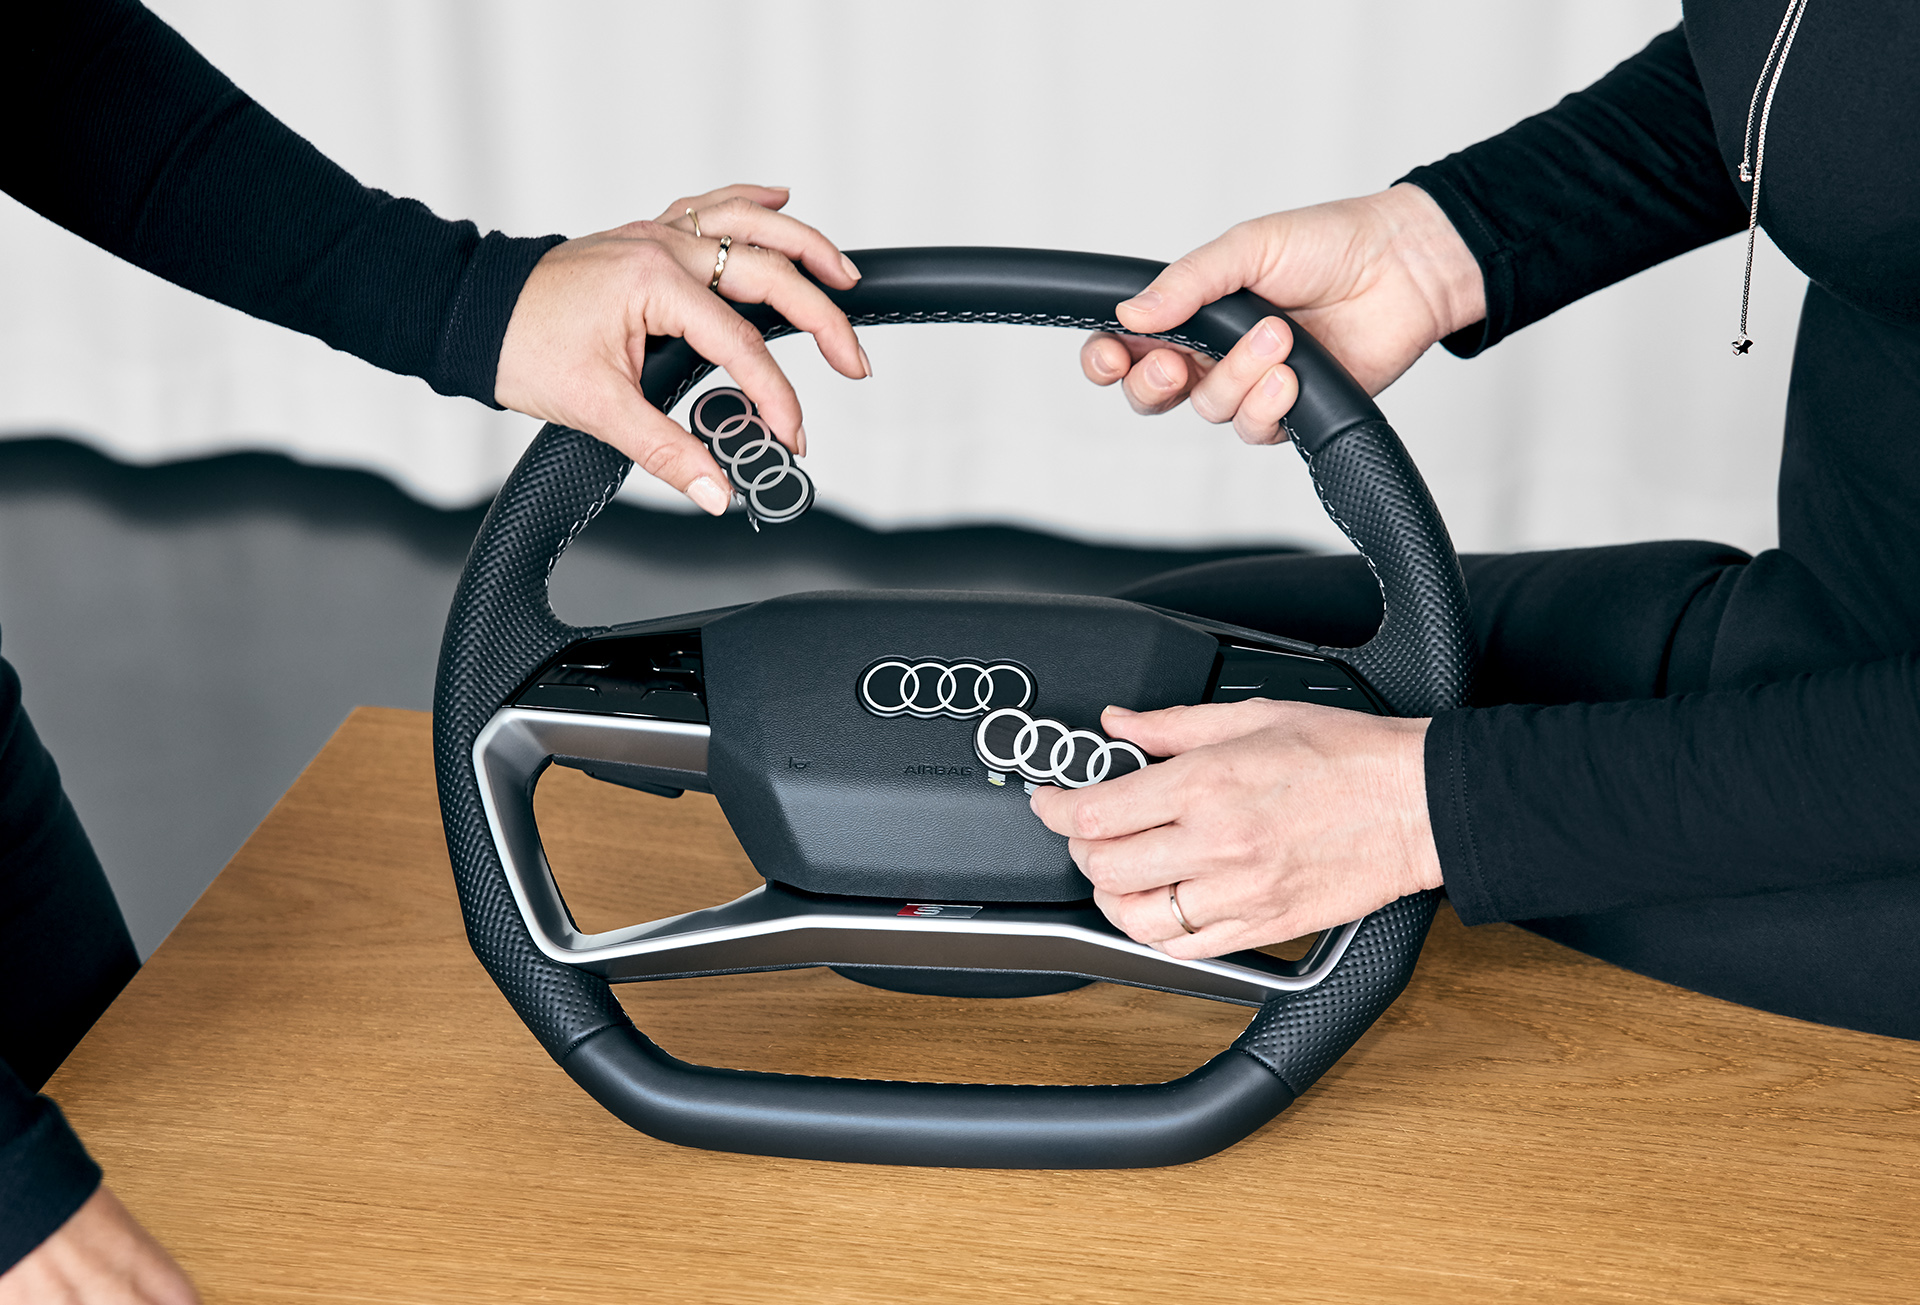 Die neuen Audi Ringe am Beispiel des Lenkrads des Audi Q4 e-tron